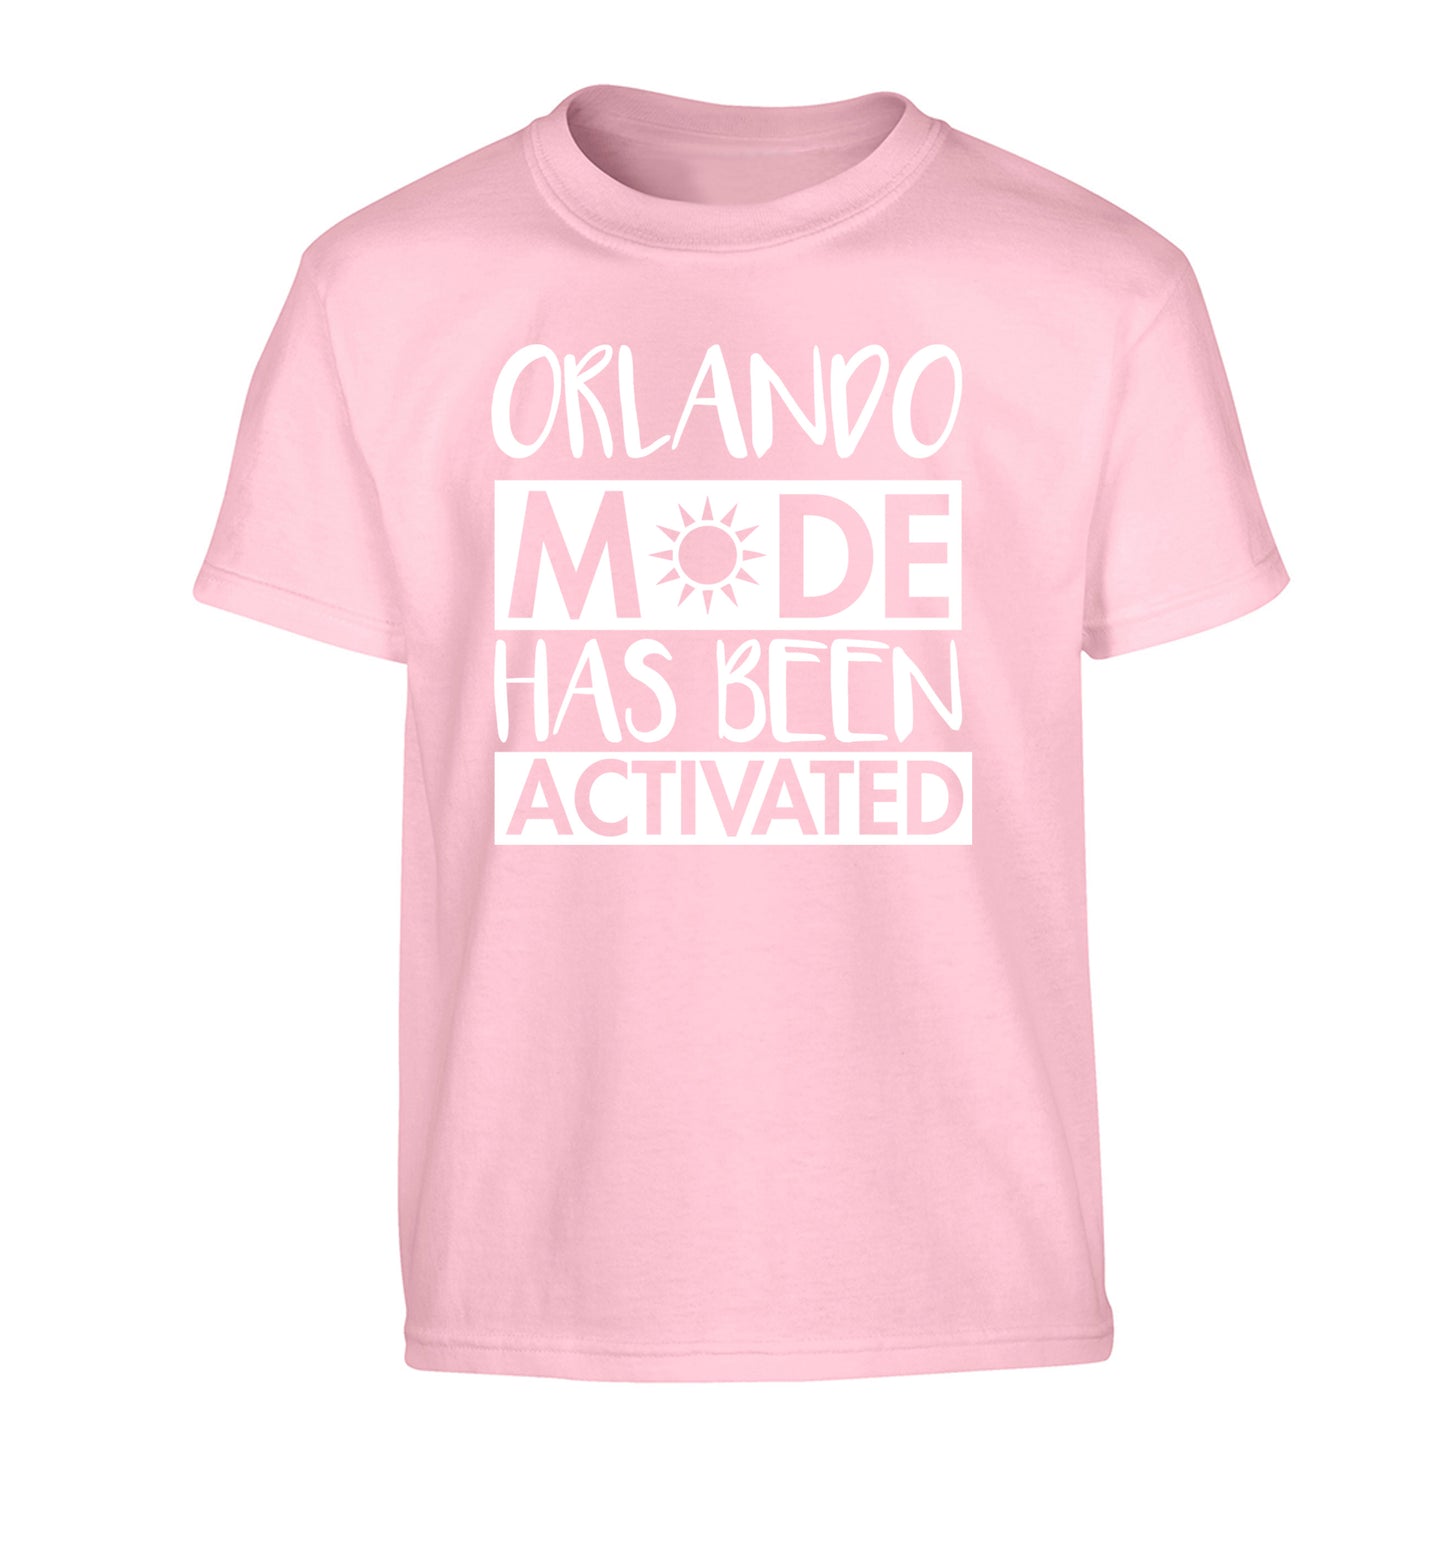 Orlando mode has been activated Children's light pink Tshirt 12-13 Years